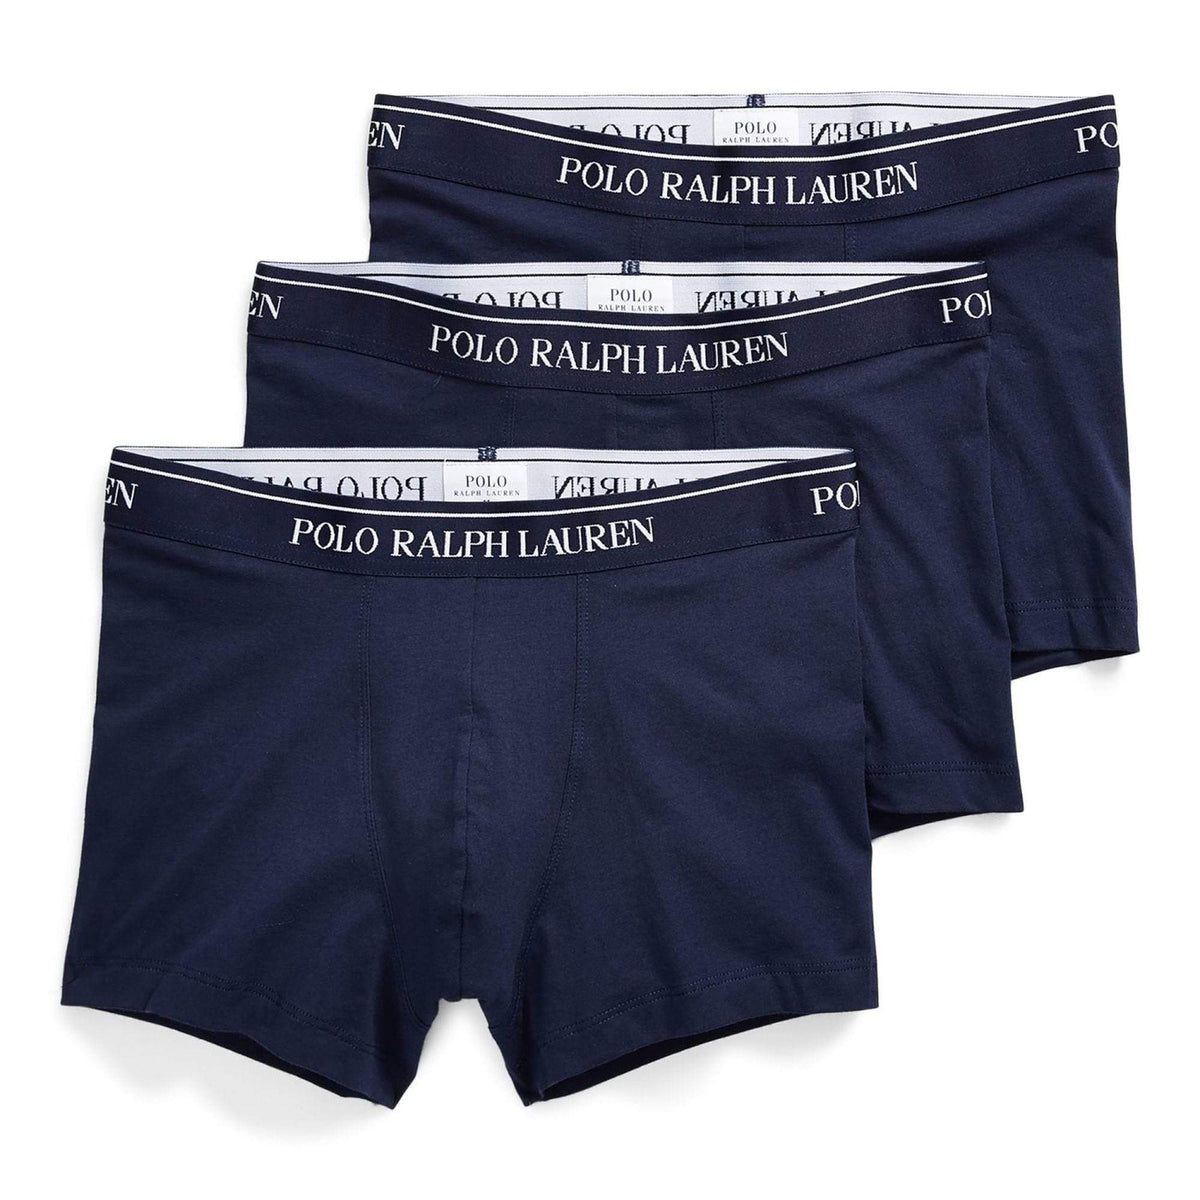 Polo Ralph Lauren - Underwear - Polo Ralph Lauren Cotton Trunk 3-Pack